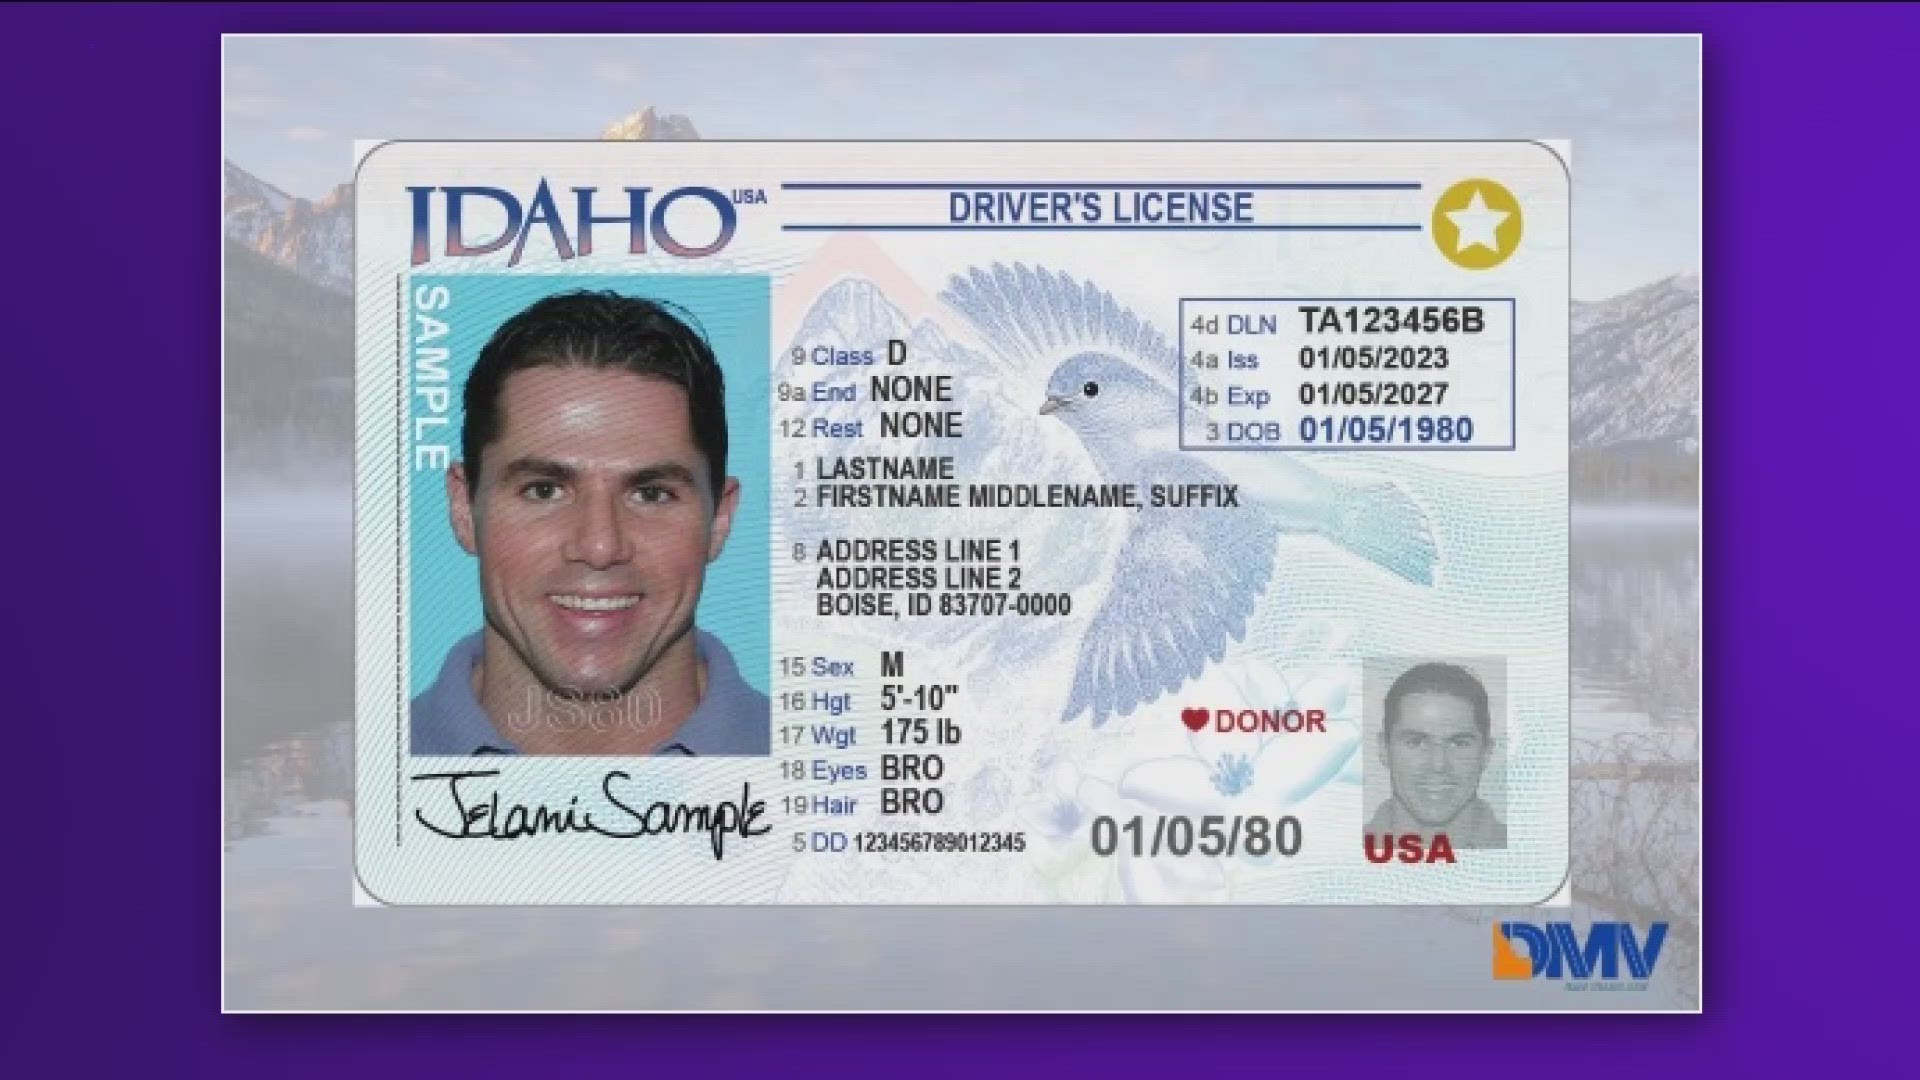 Idaho new driver’s license card design here